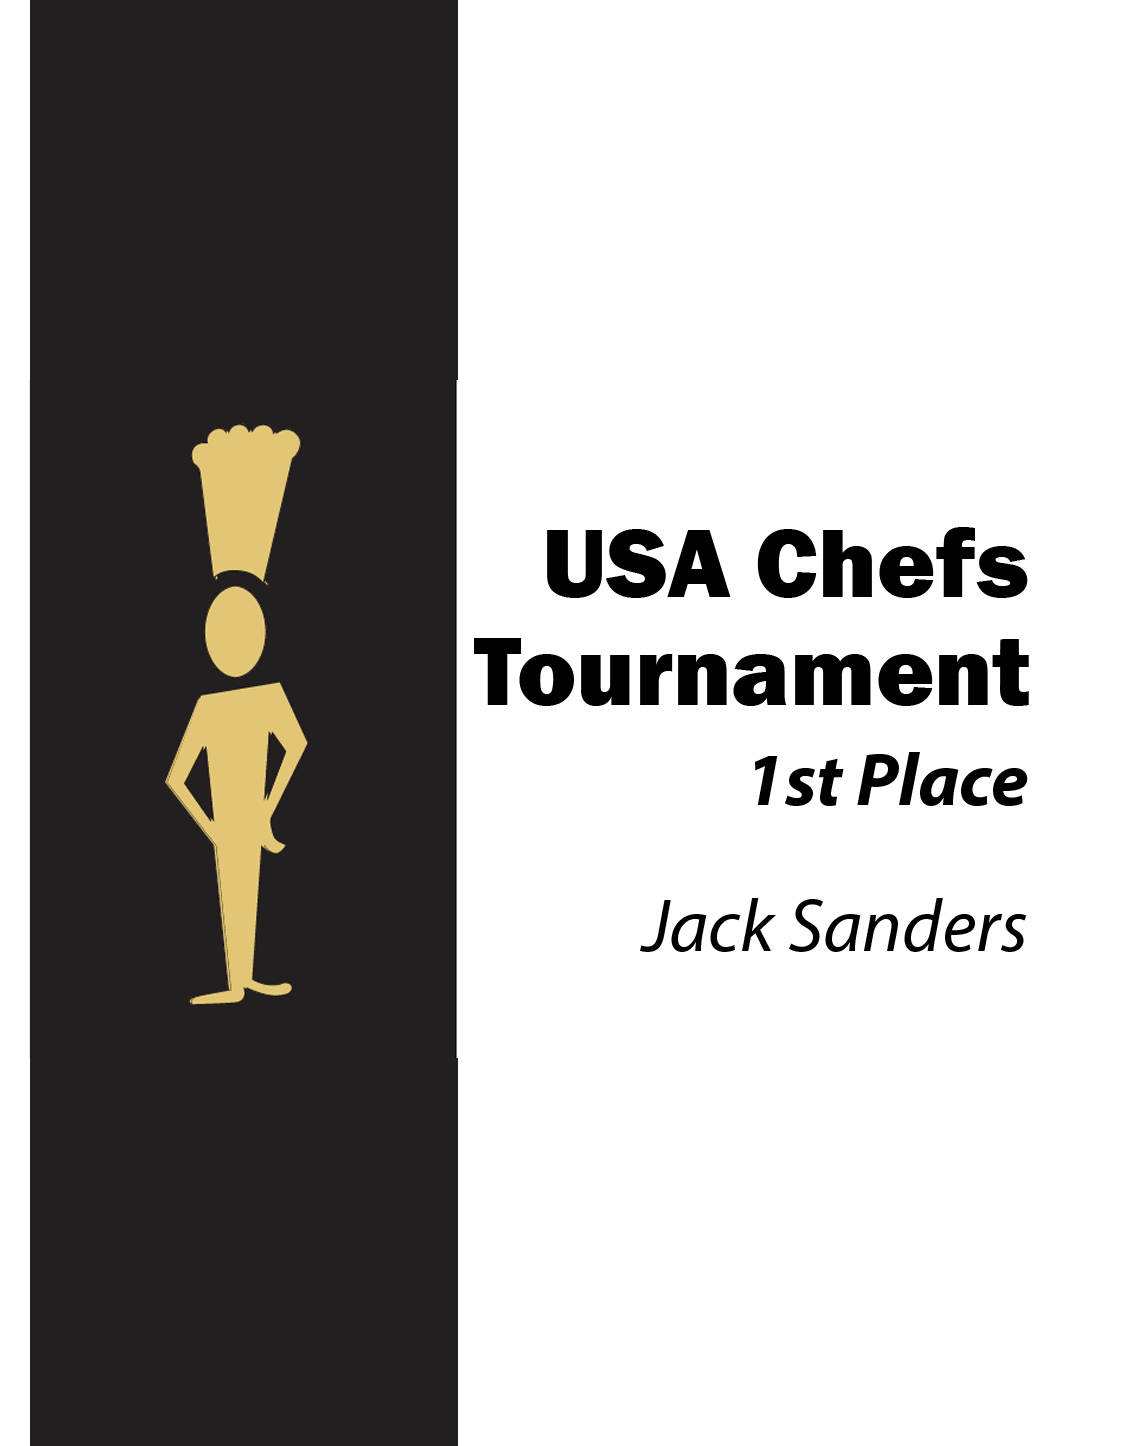 USA Chefs Tournament 1st Place Jack Sanders